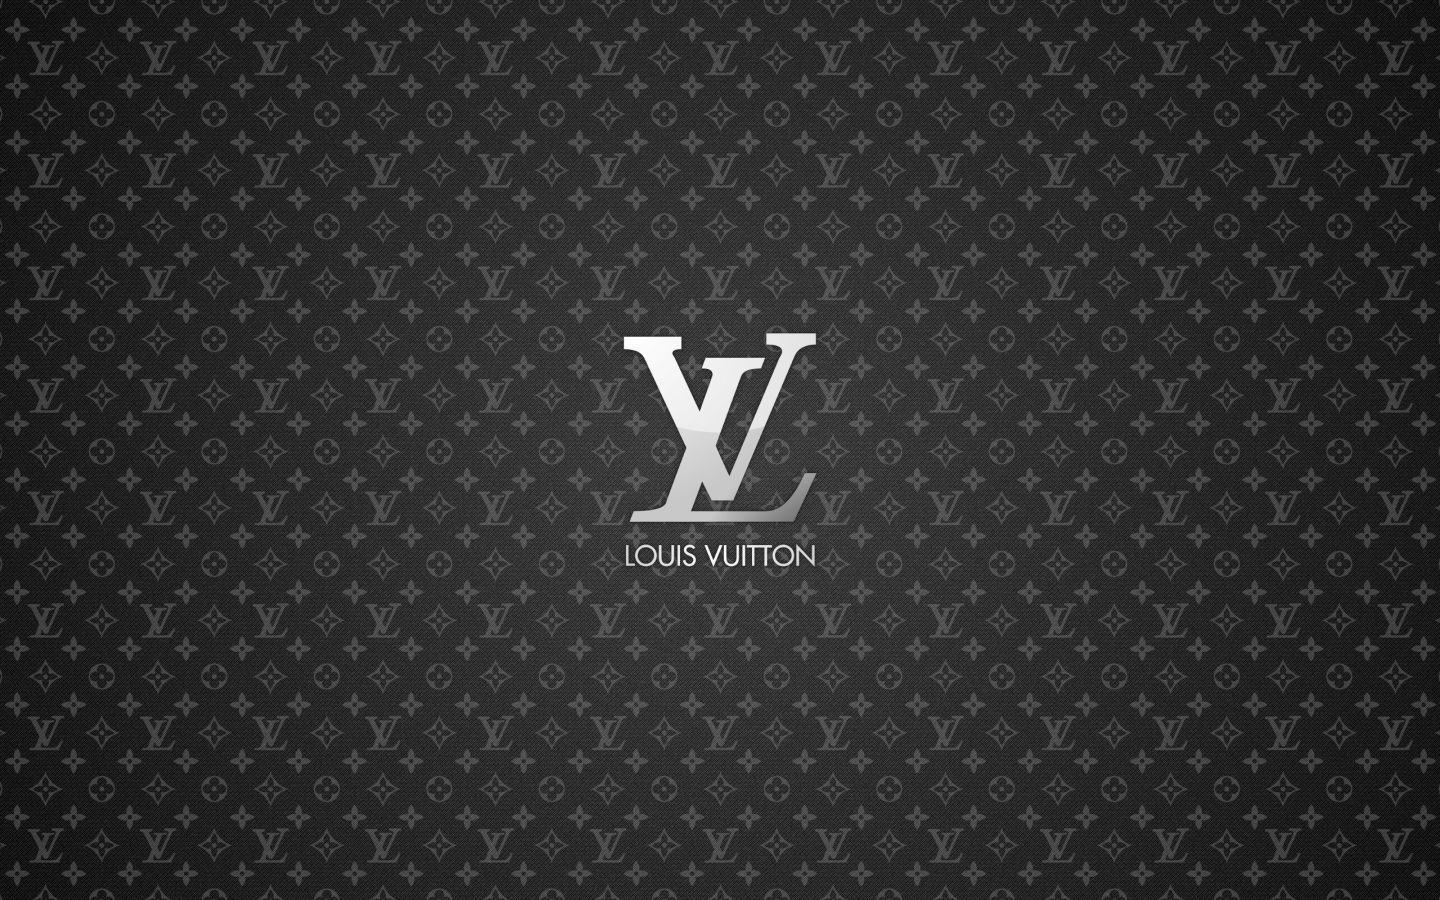 Louis Vuitton Mac Wallpaper Download | Free Mac Wallpapers Download